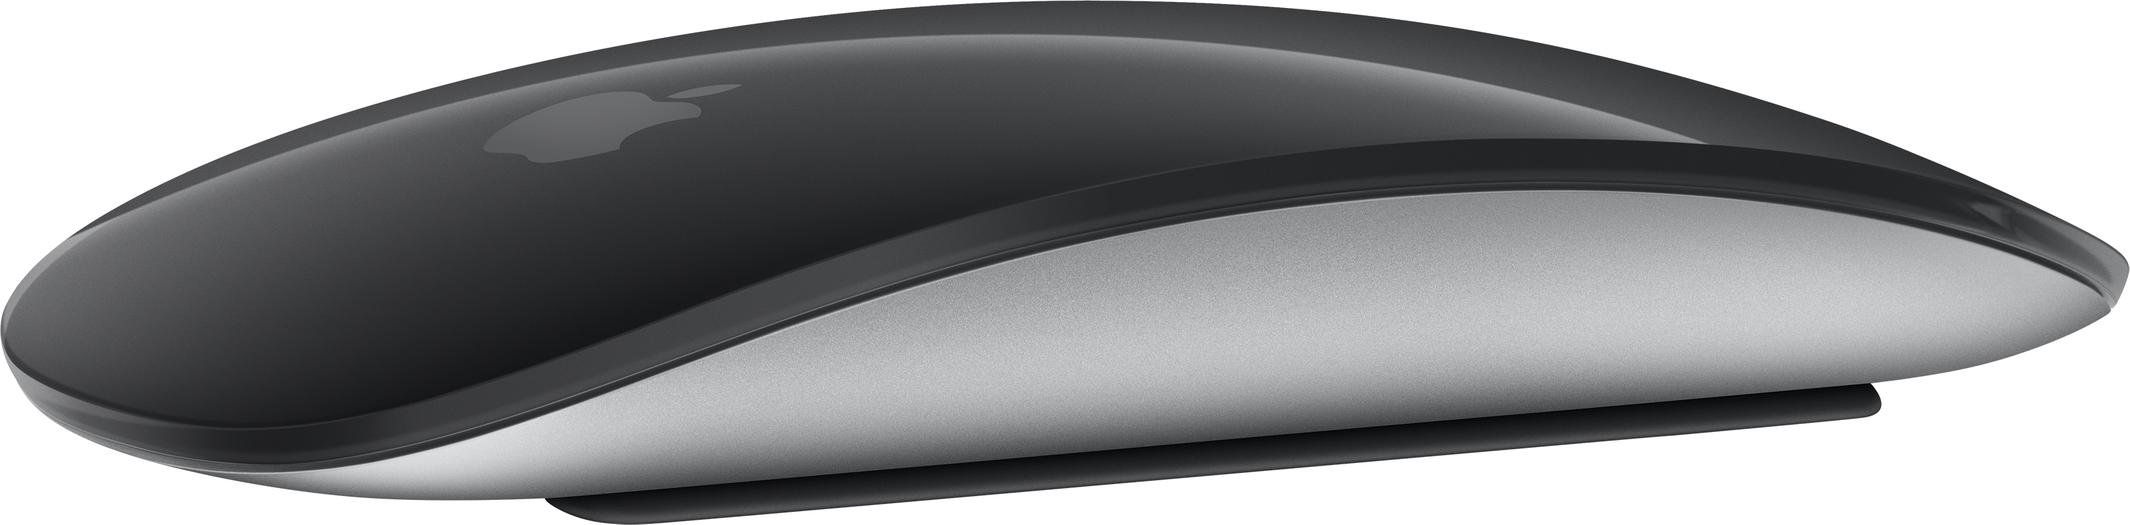 Offerta per Apple - Magic Mouse - superficie Multi-Touch nera a 79€ in Comet